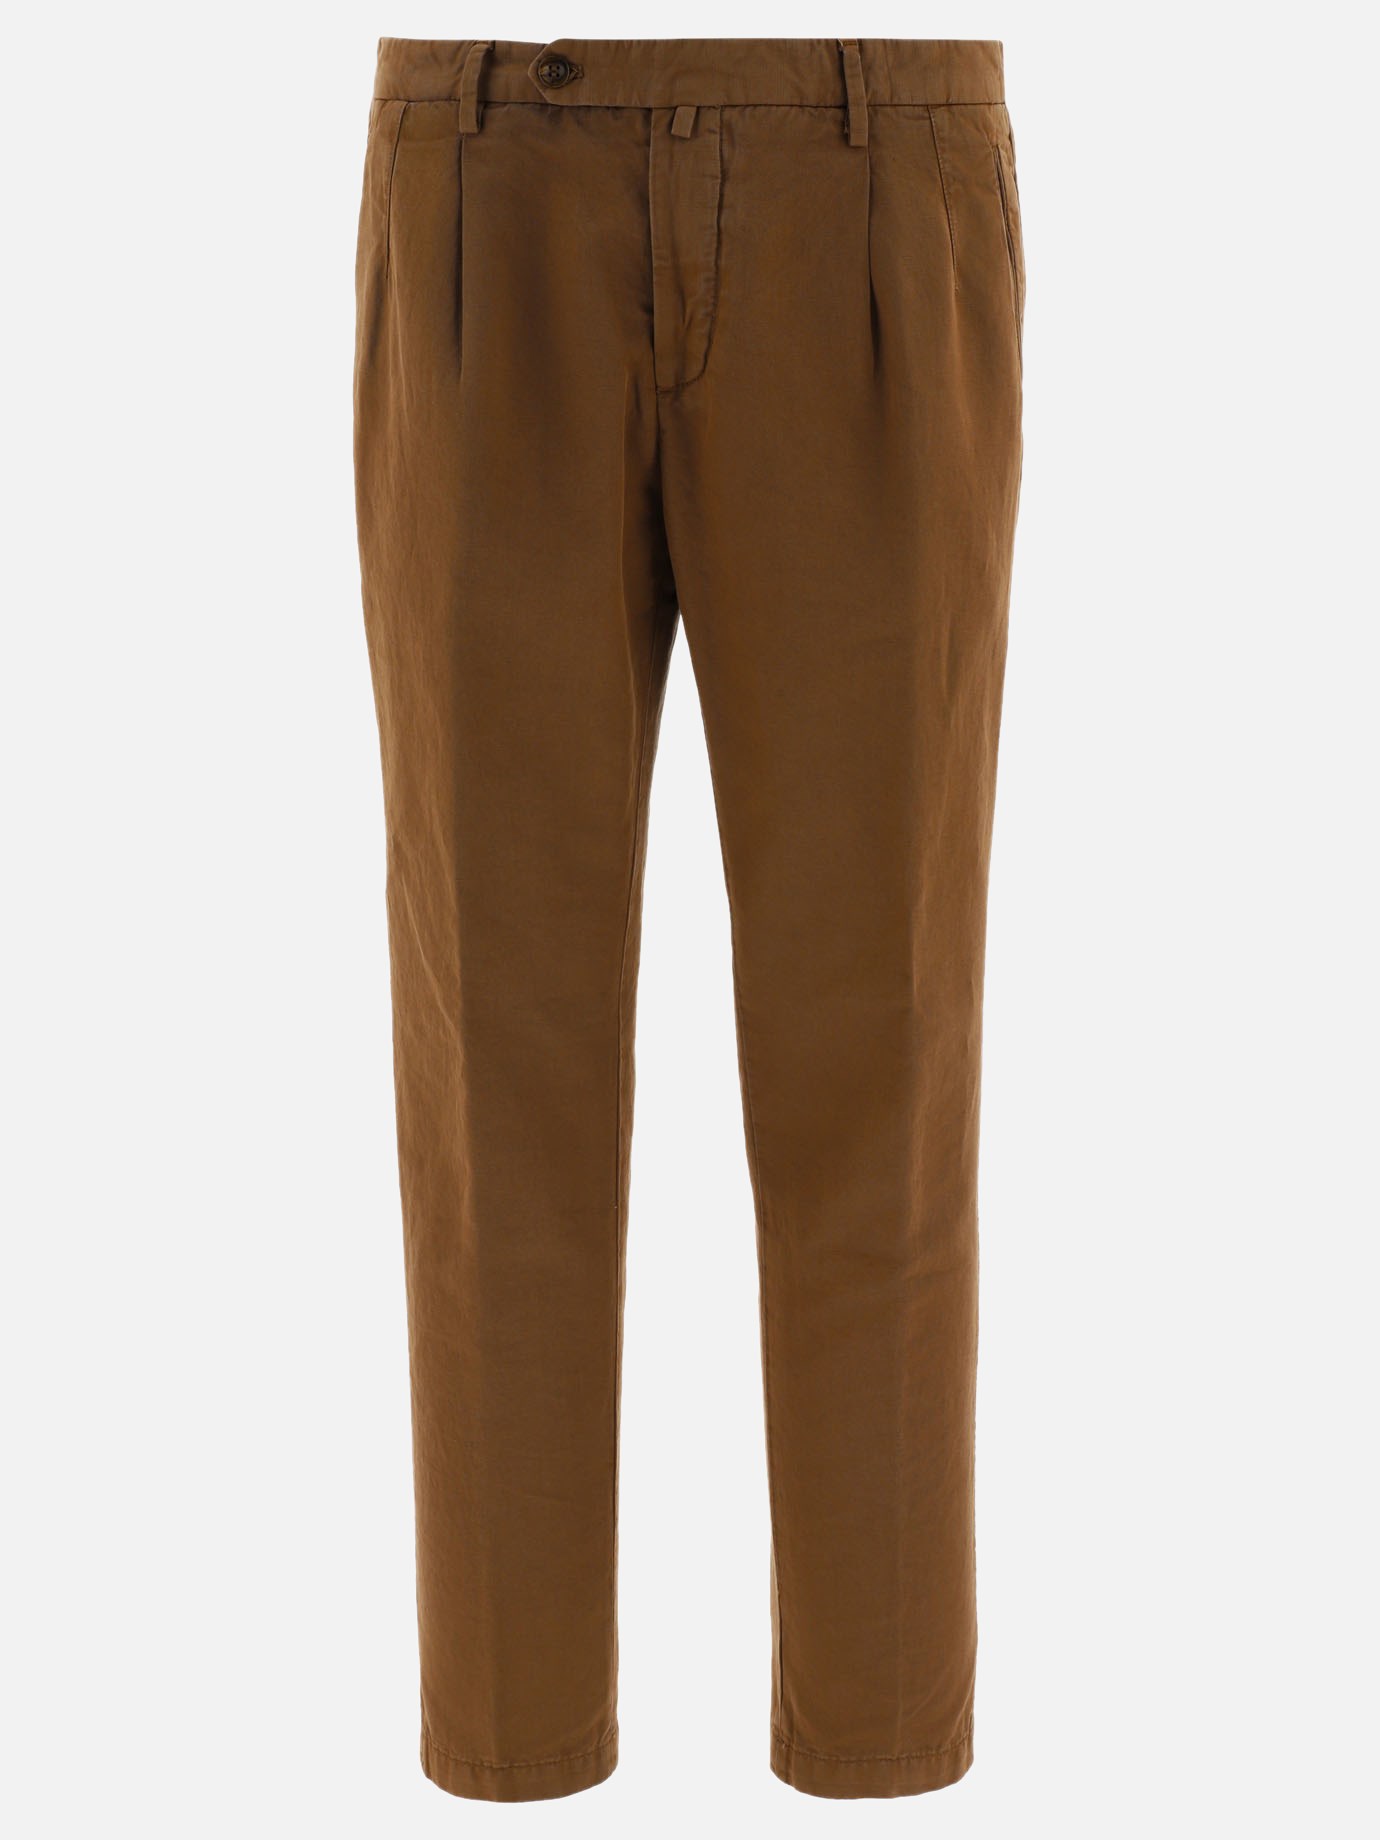 Pantaloni  Cernobbio by Briglia 1949 - 1